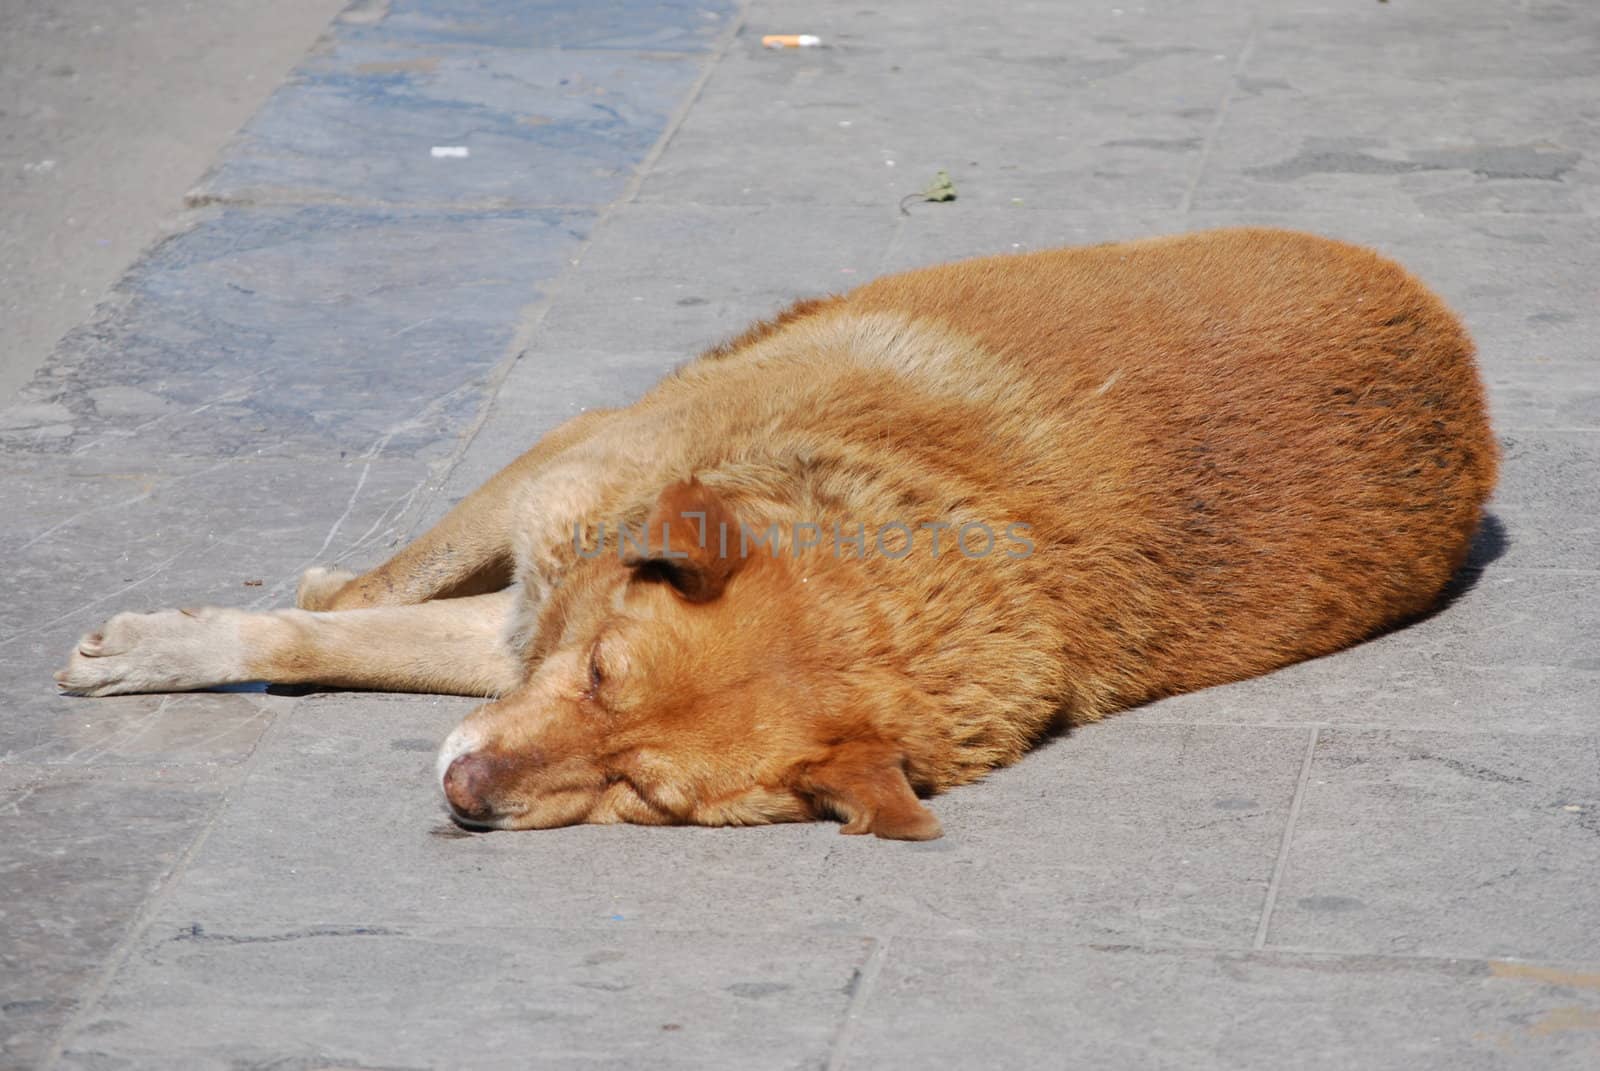 A lying dog on the street.